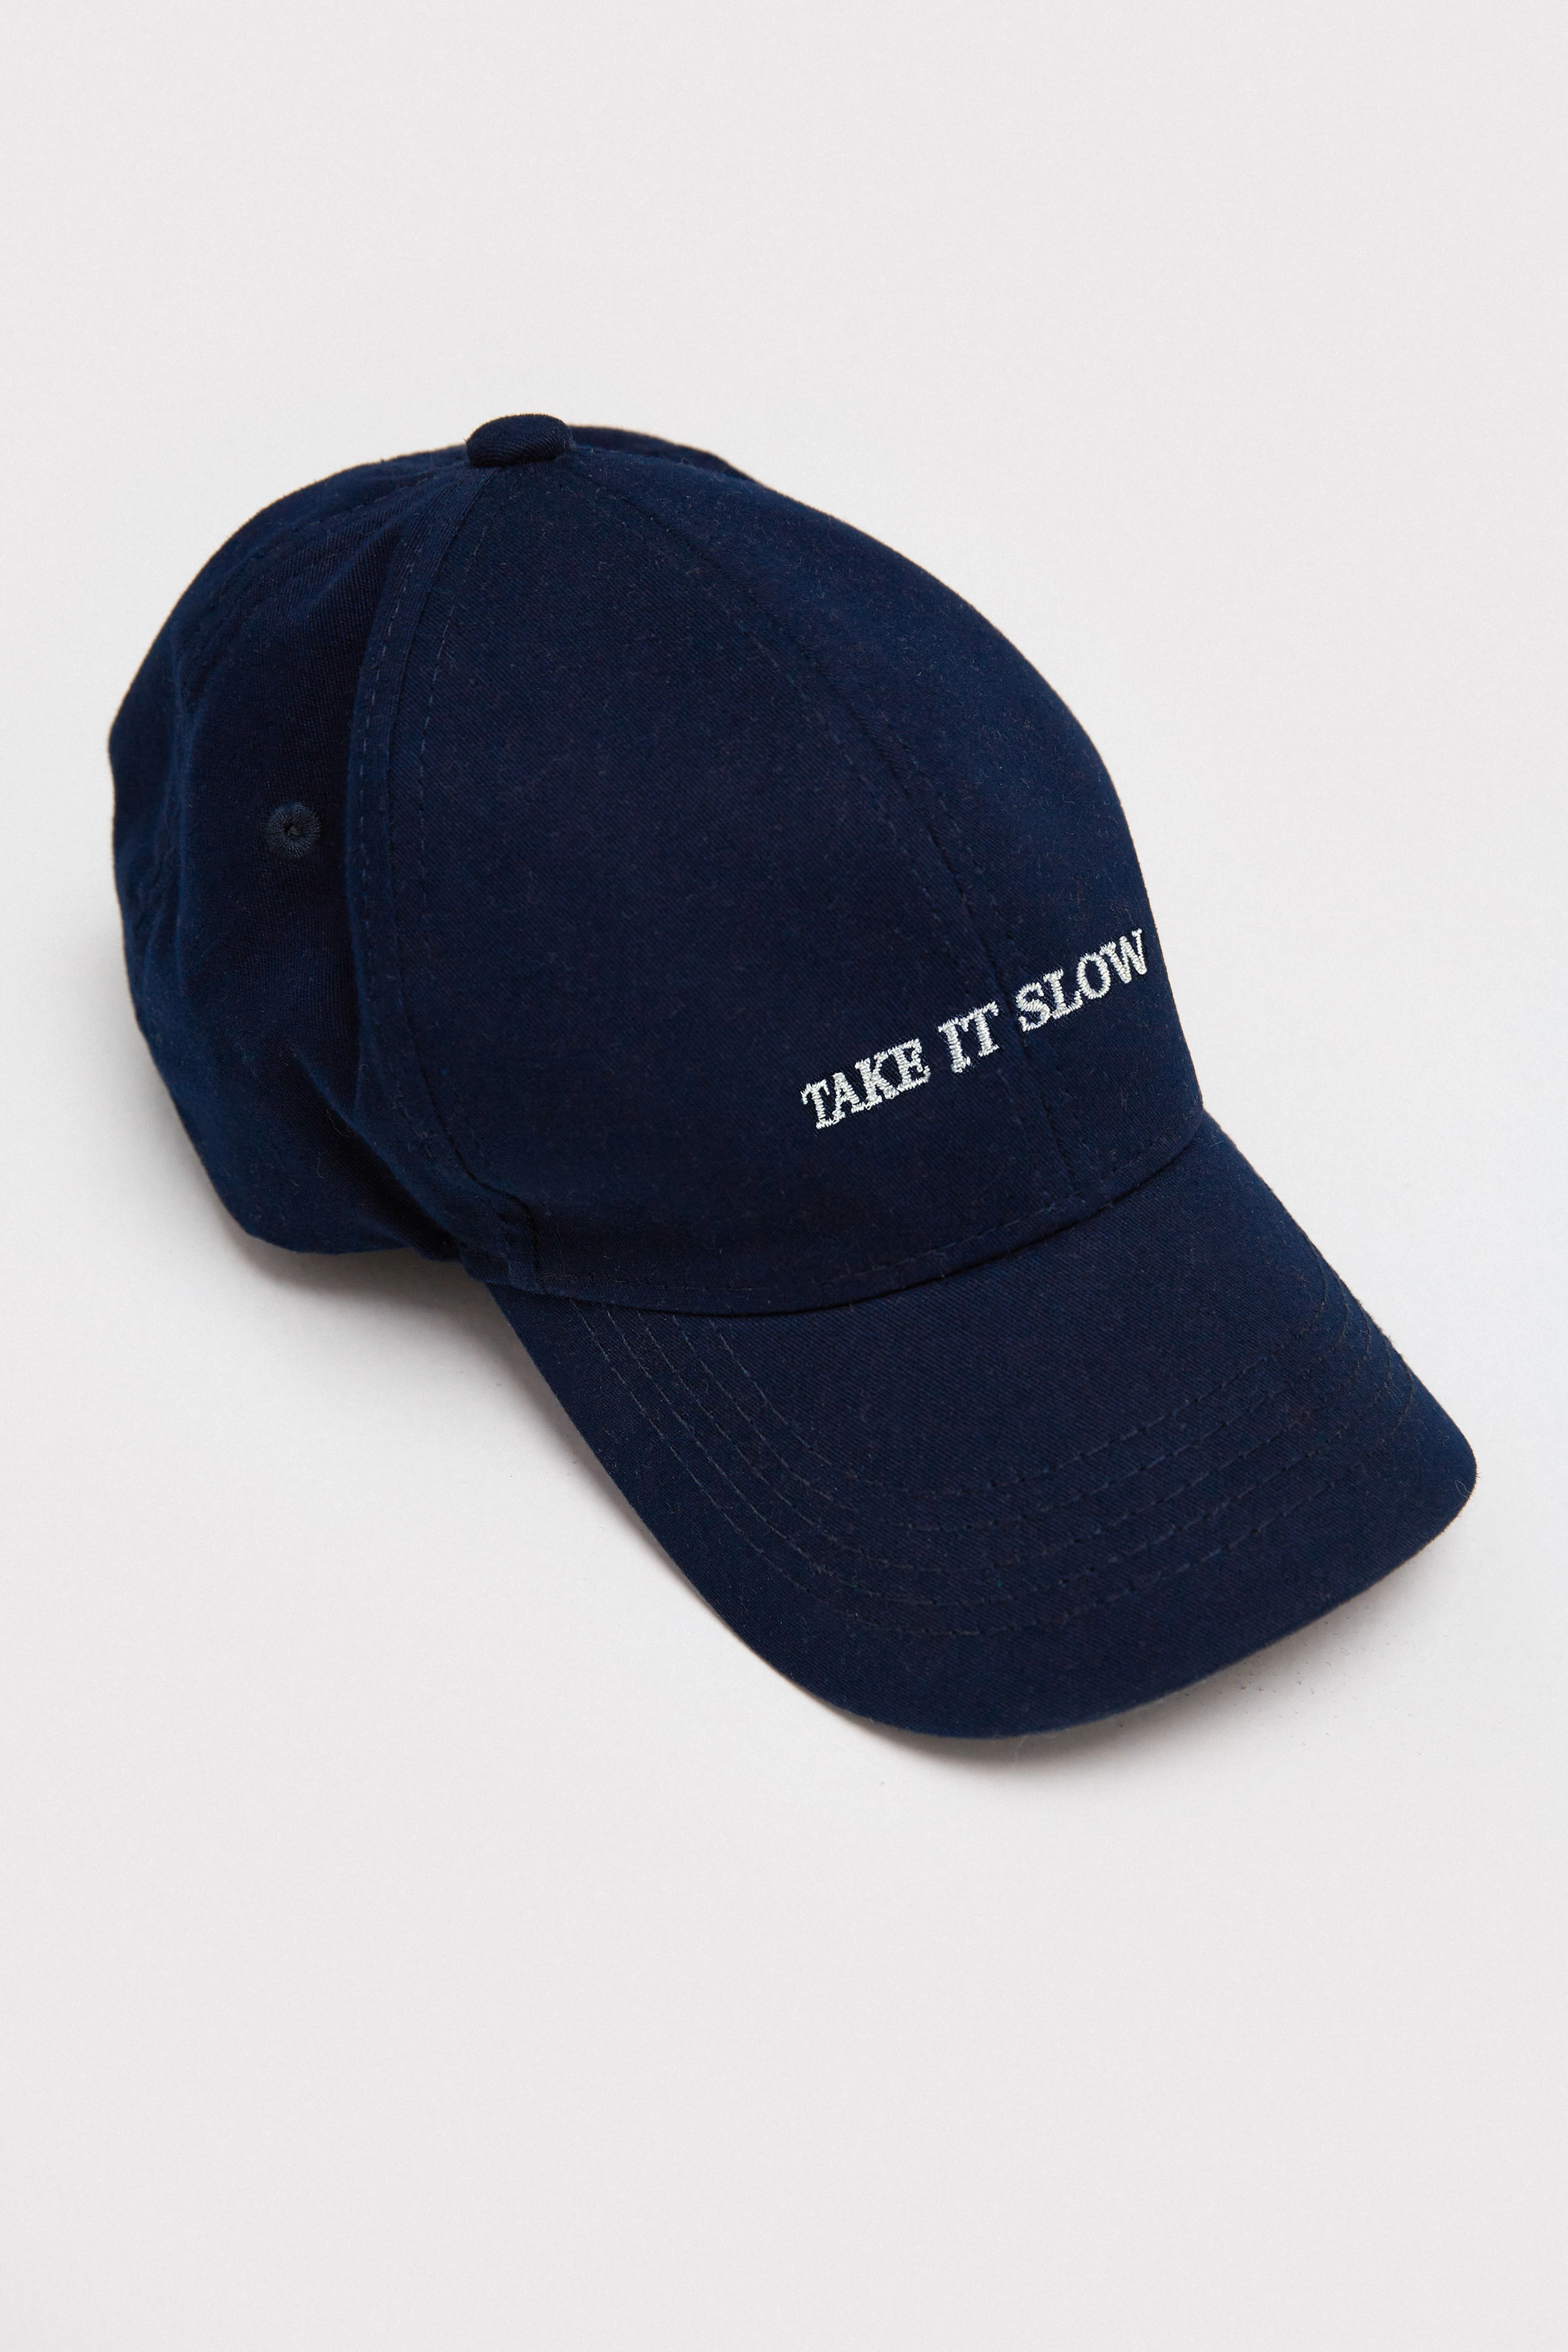 Navy blue baseball cap "Take it slow", photo 1